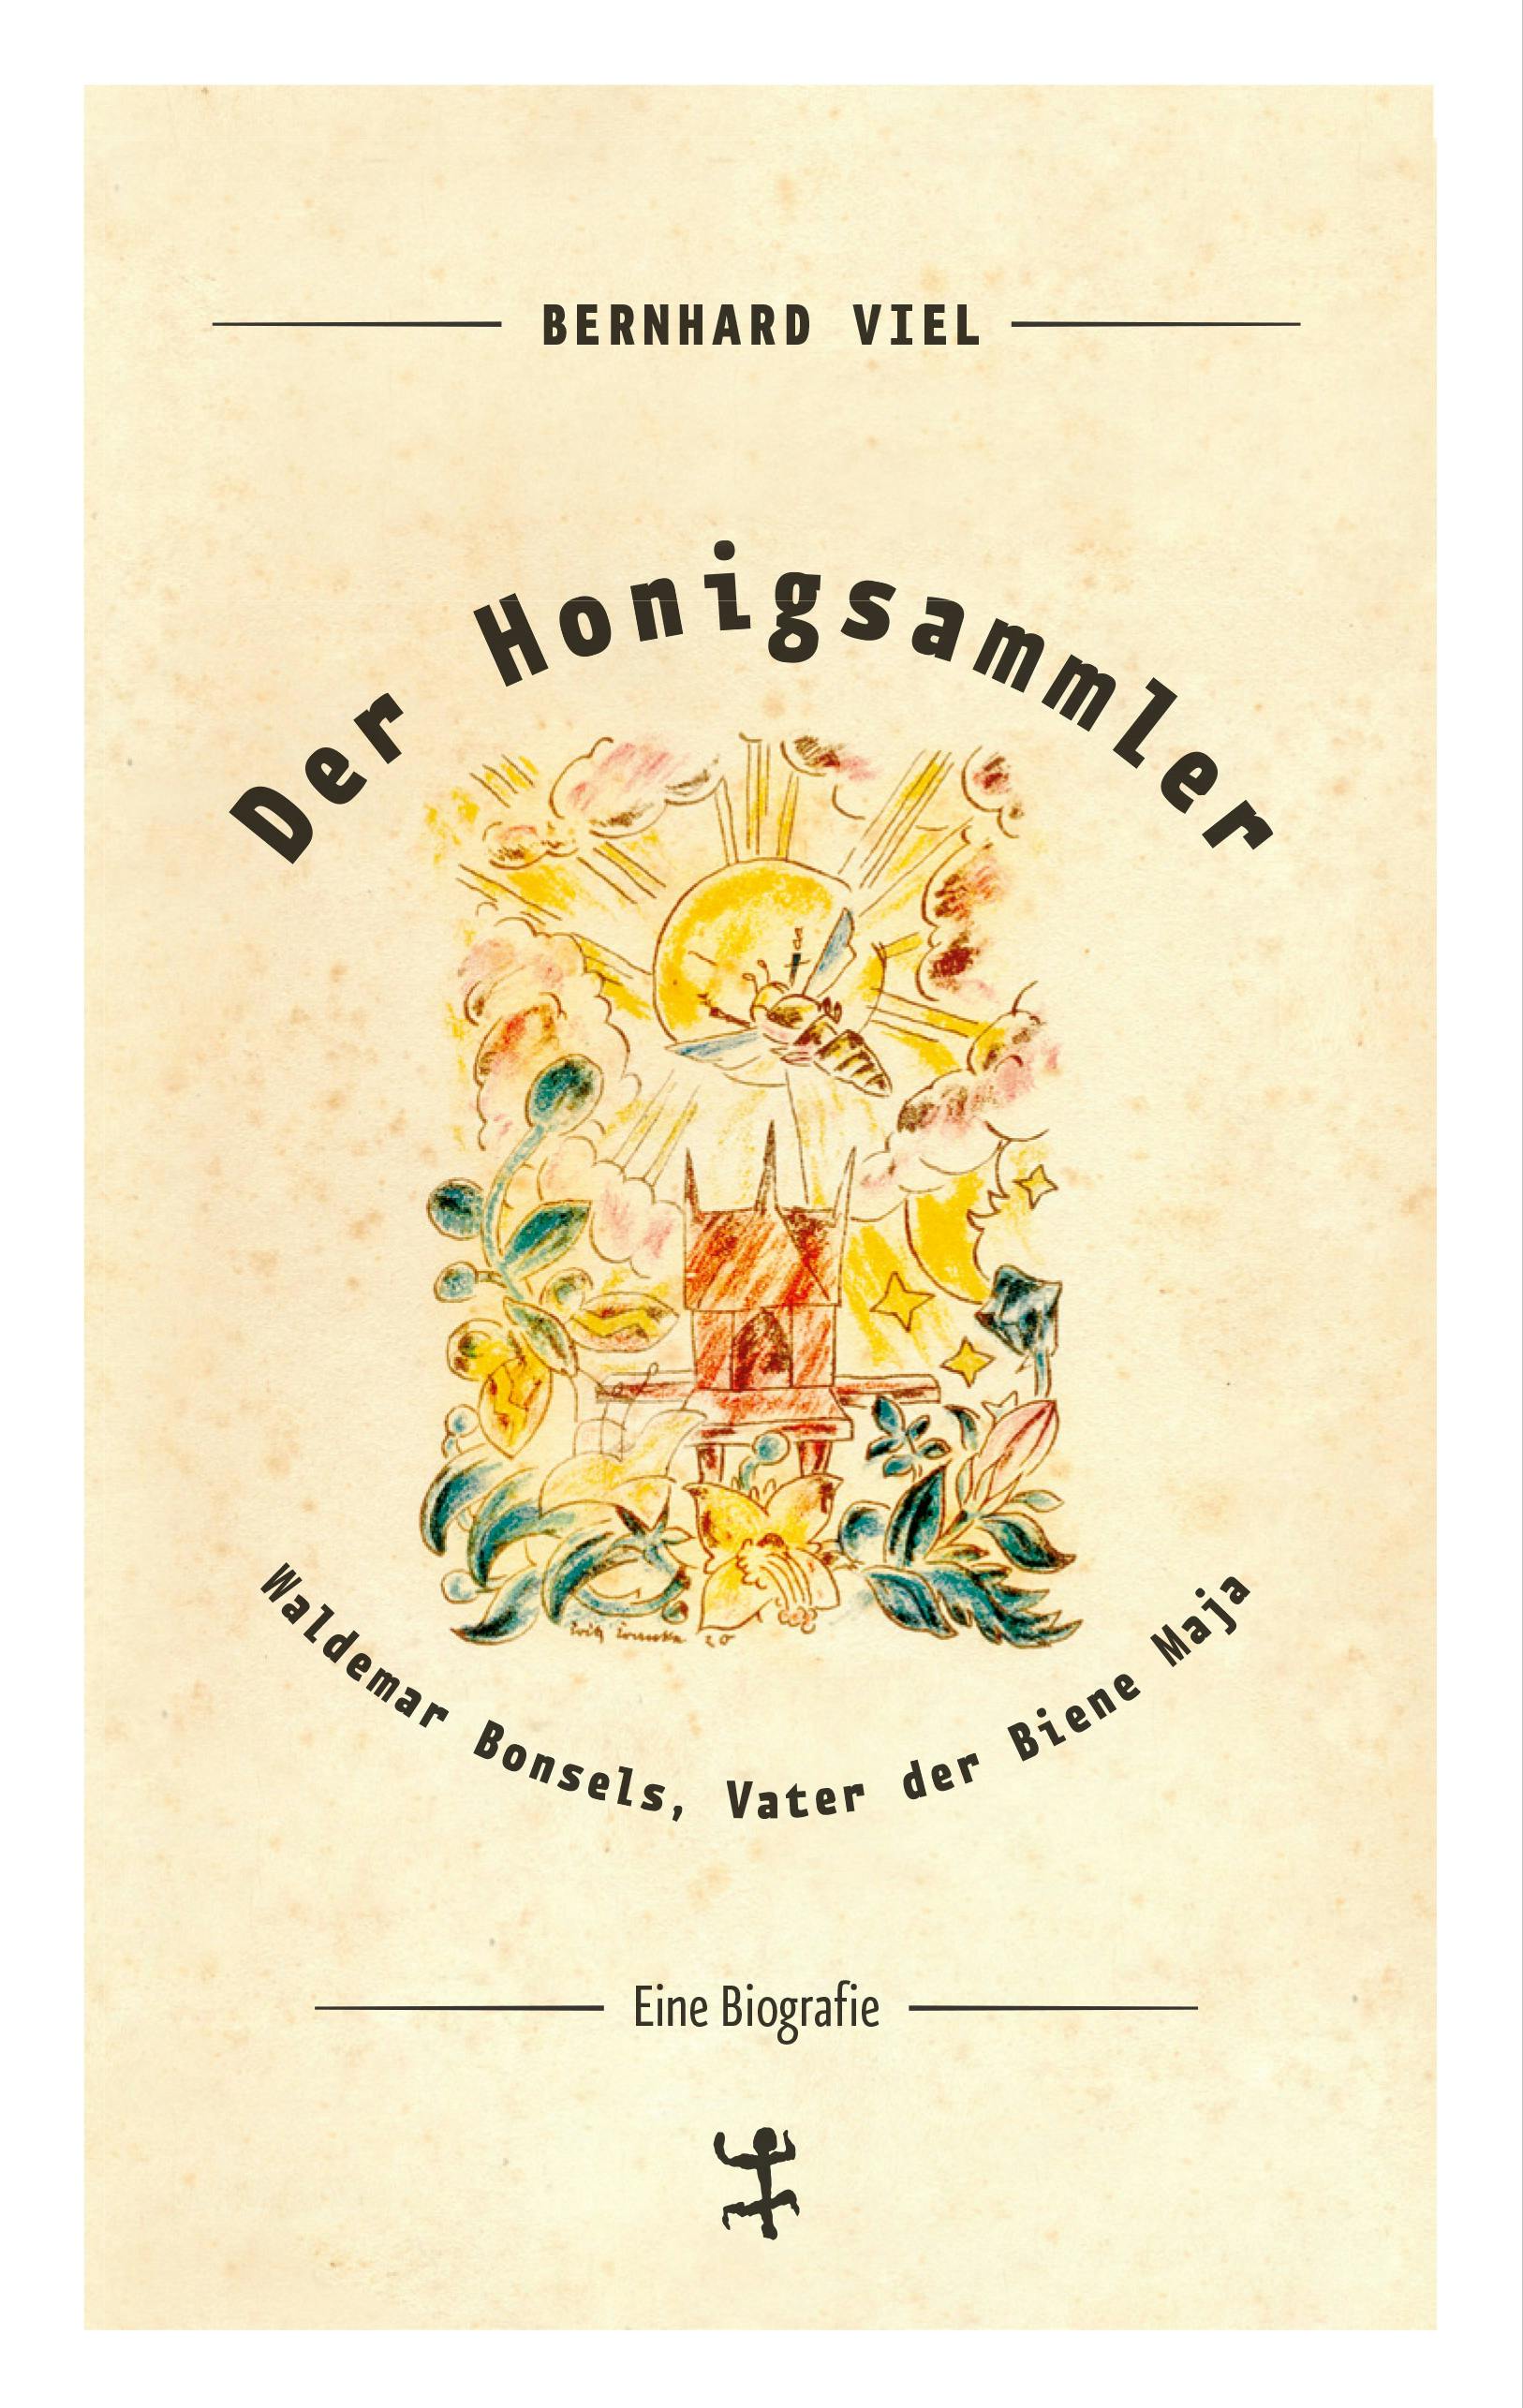 Der Honigsammler: Waldemar Bonsels, Vater der Biene Maja - Bernhard Viel